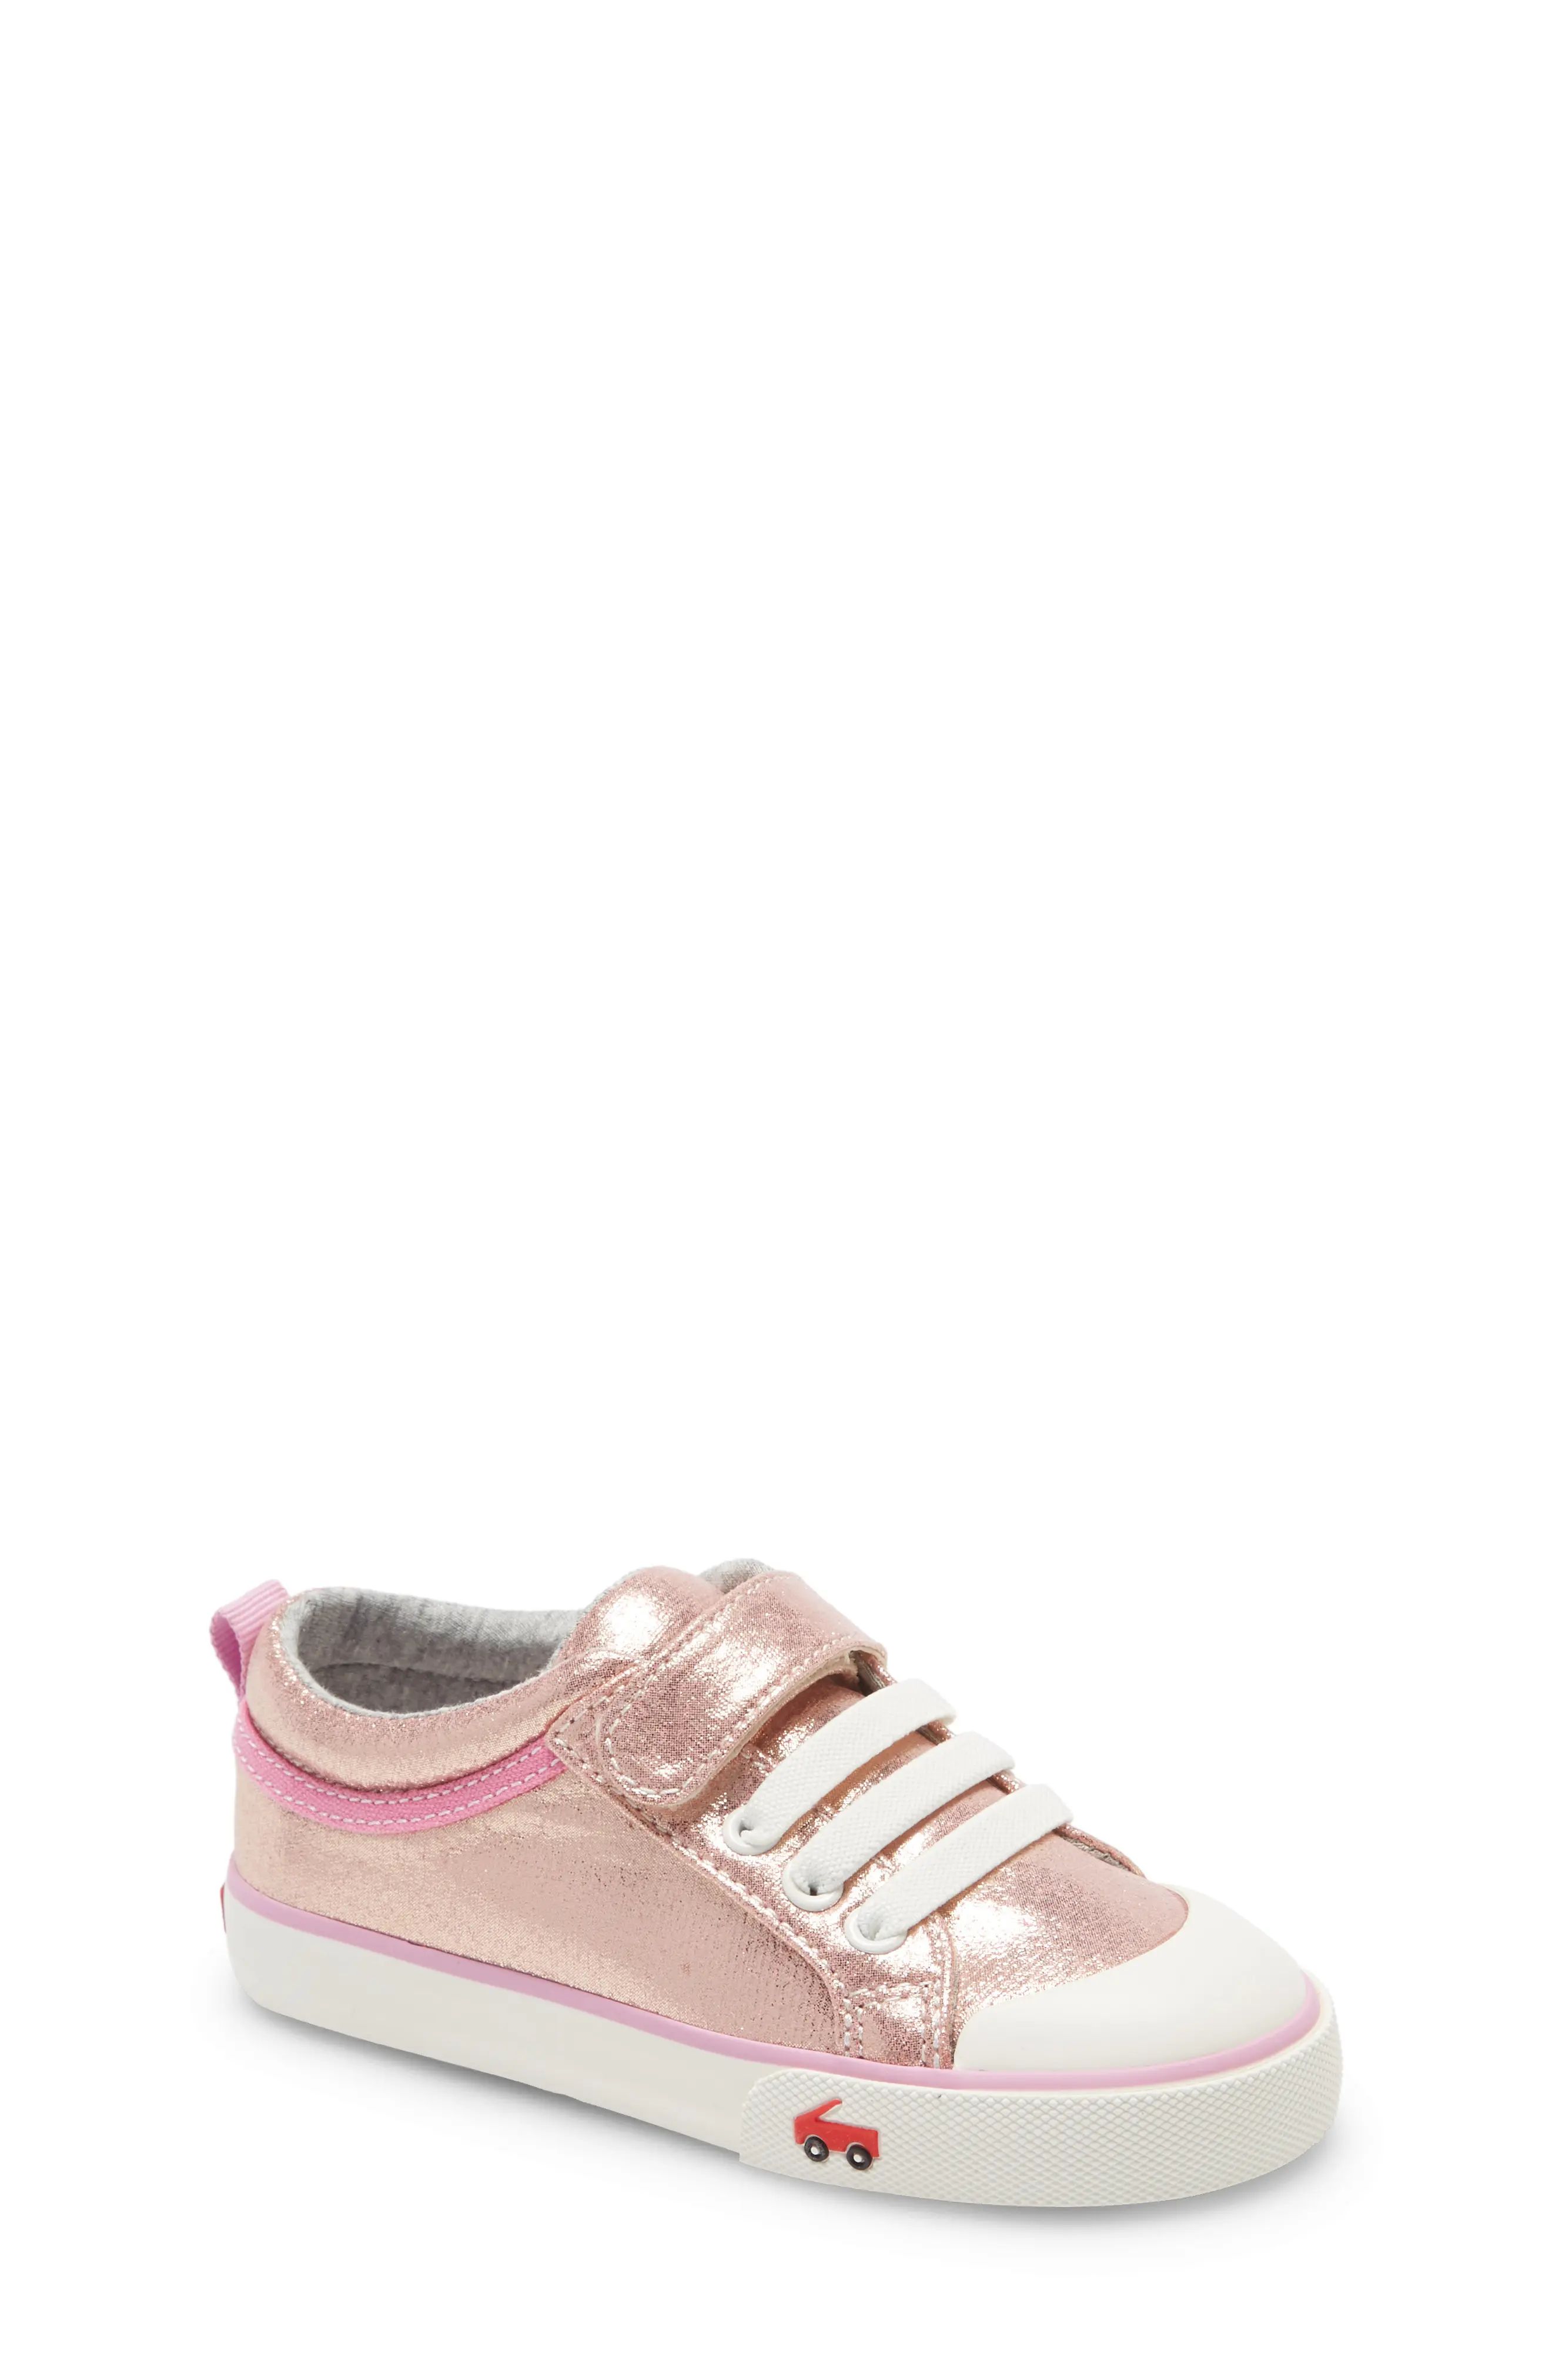 See Kai Run Kristin Sneaker in Rose Shimmer at Nordstrom, Size 8 M | Nordstrom